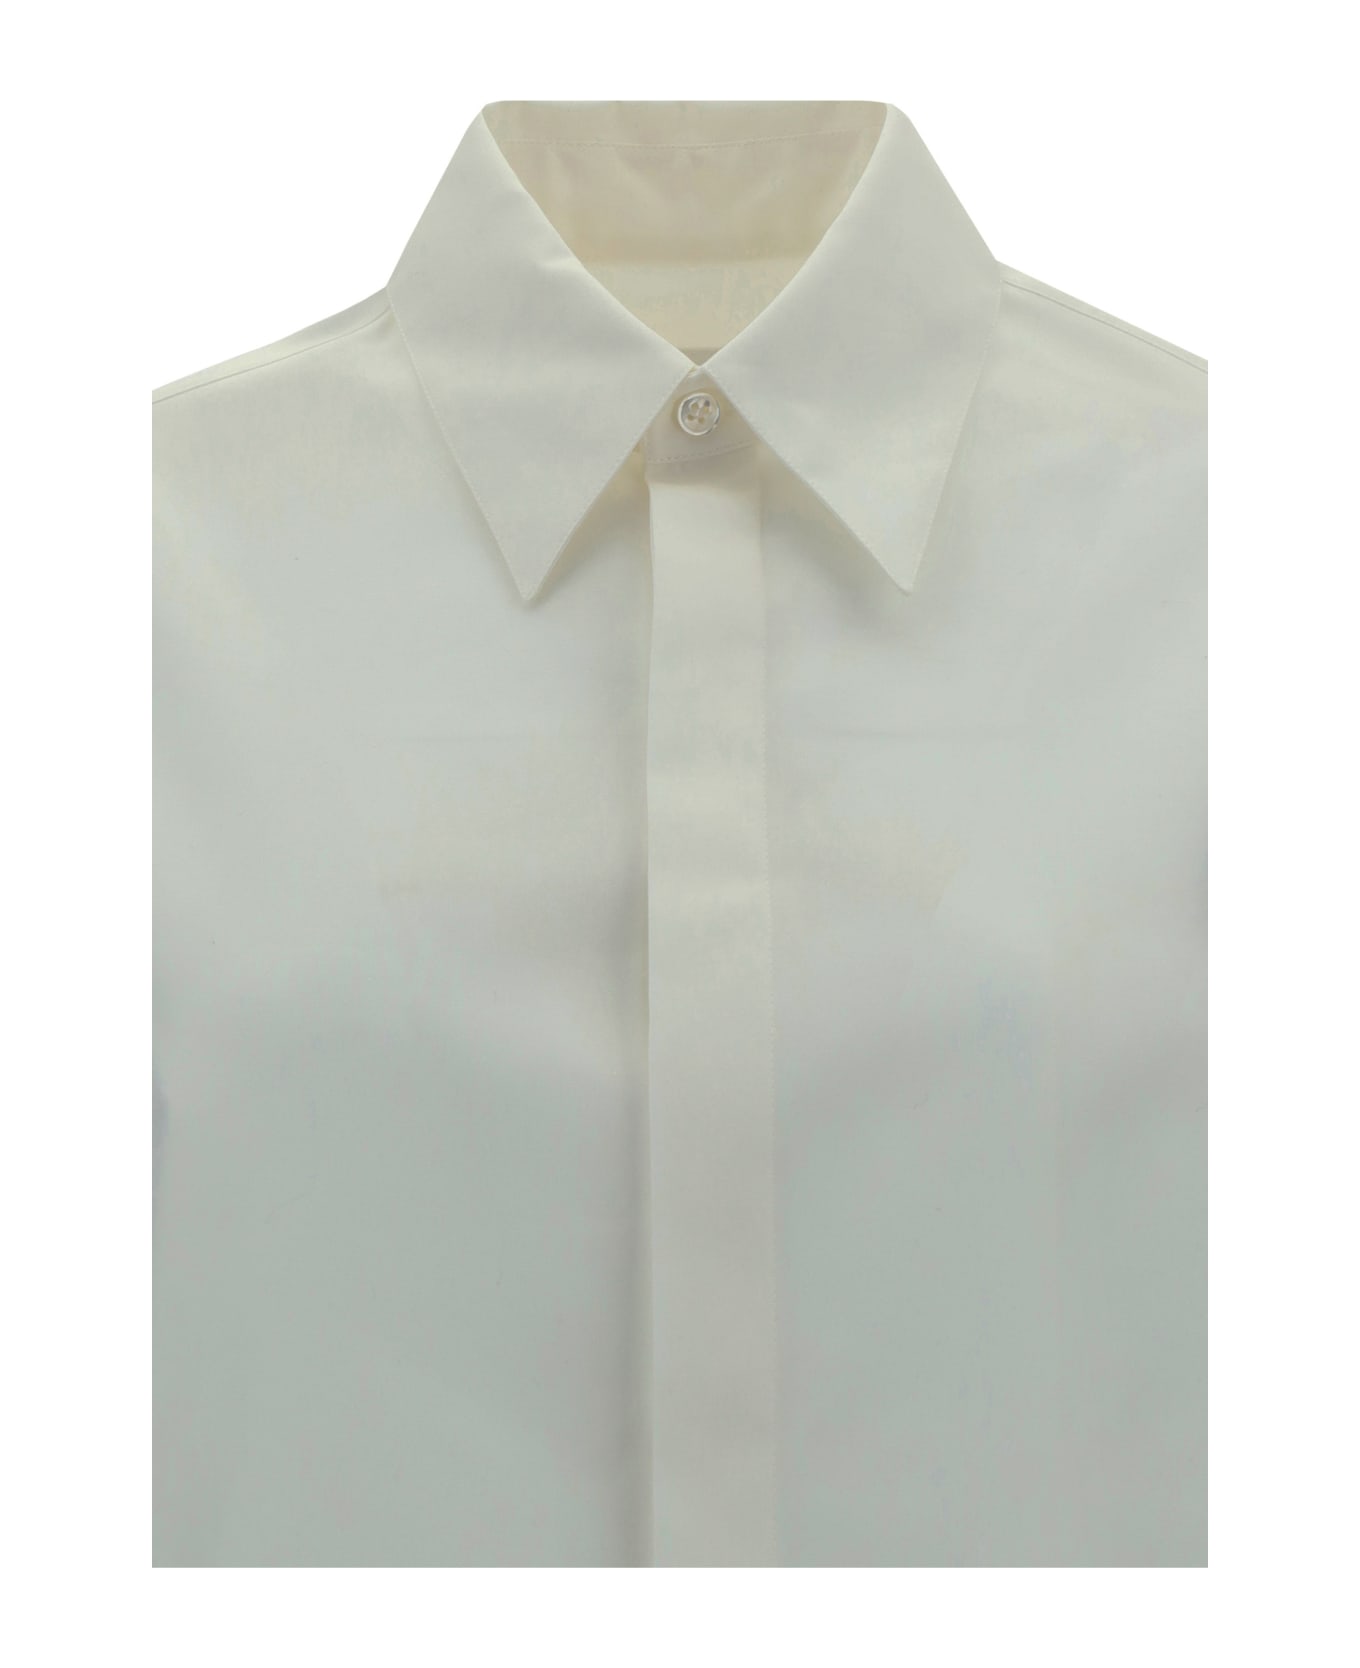 Saint Laurent Shirt - White